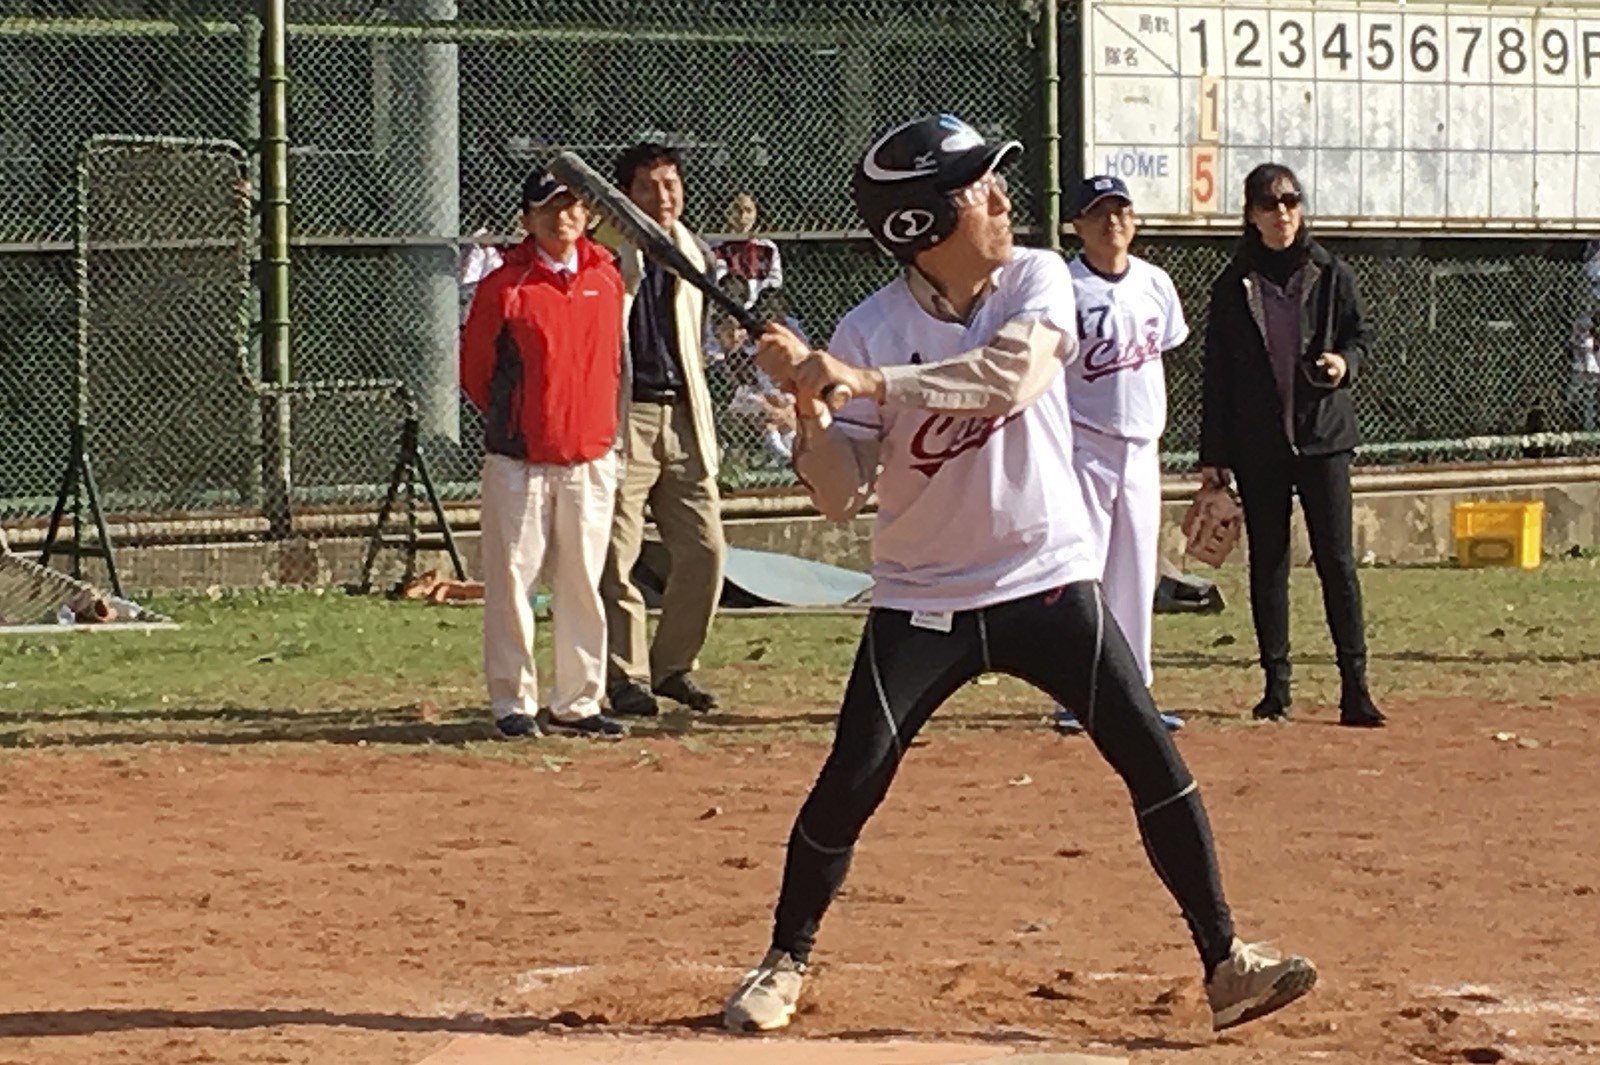 President Kuo shows his batting skills.